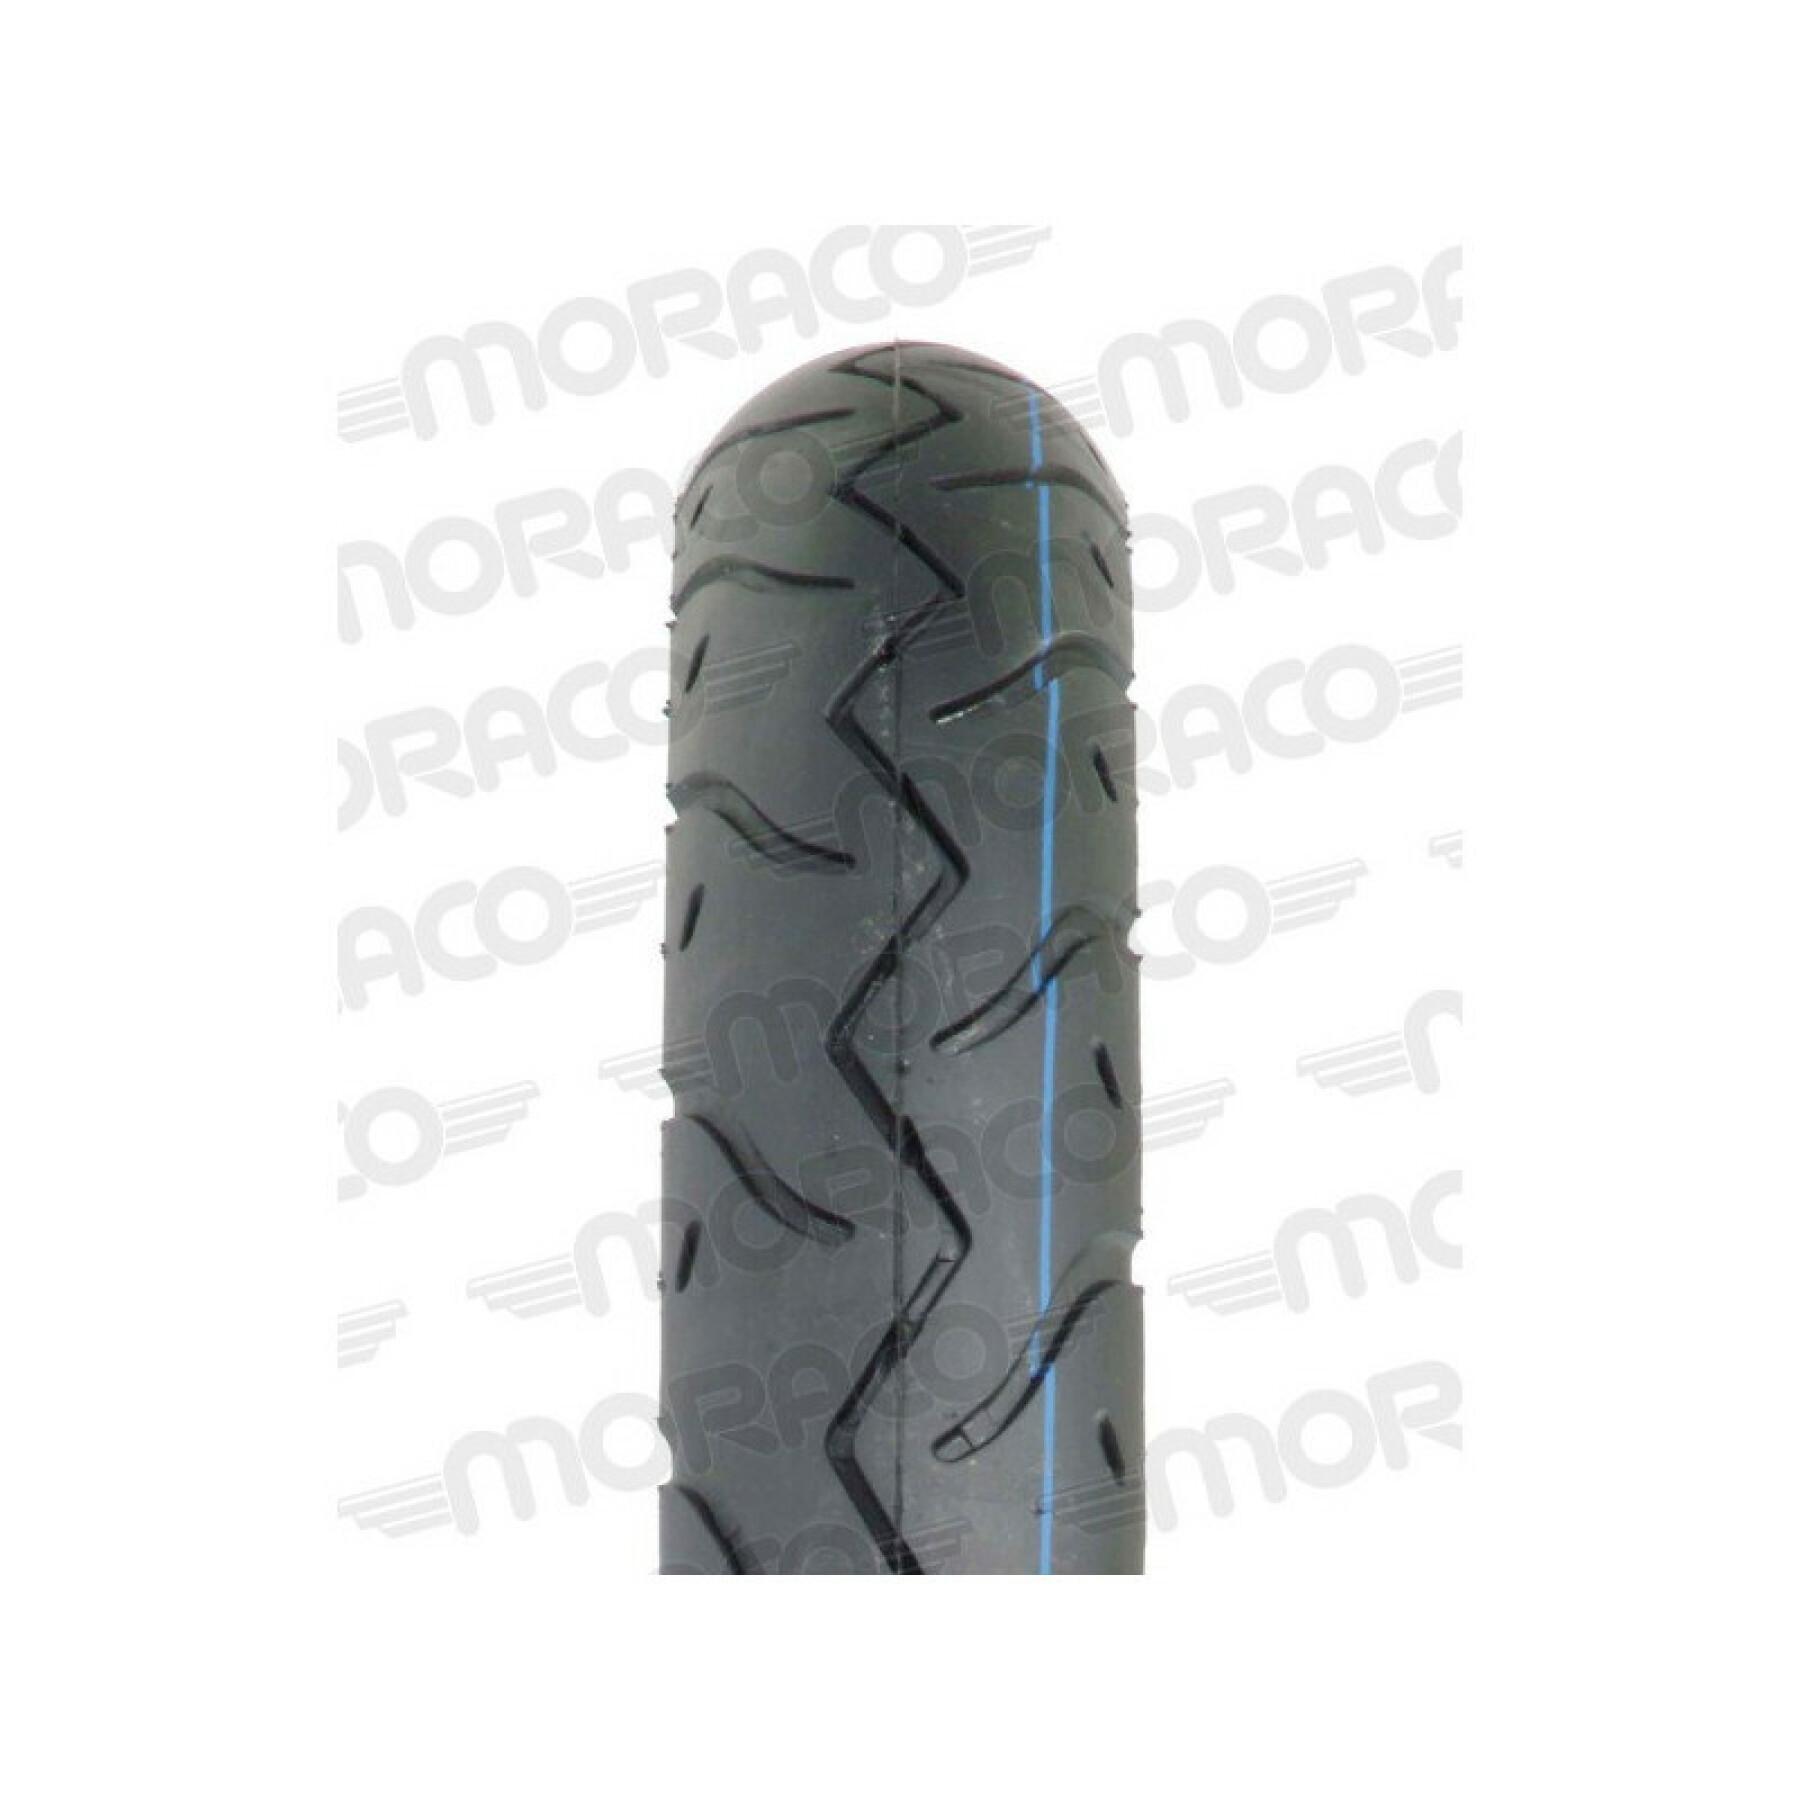 Neumáticos Vee Rubber 2.1/4-17 VRM 099 TBL (5)